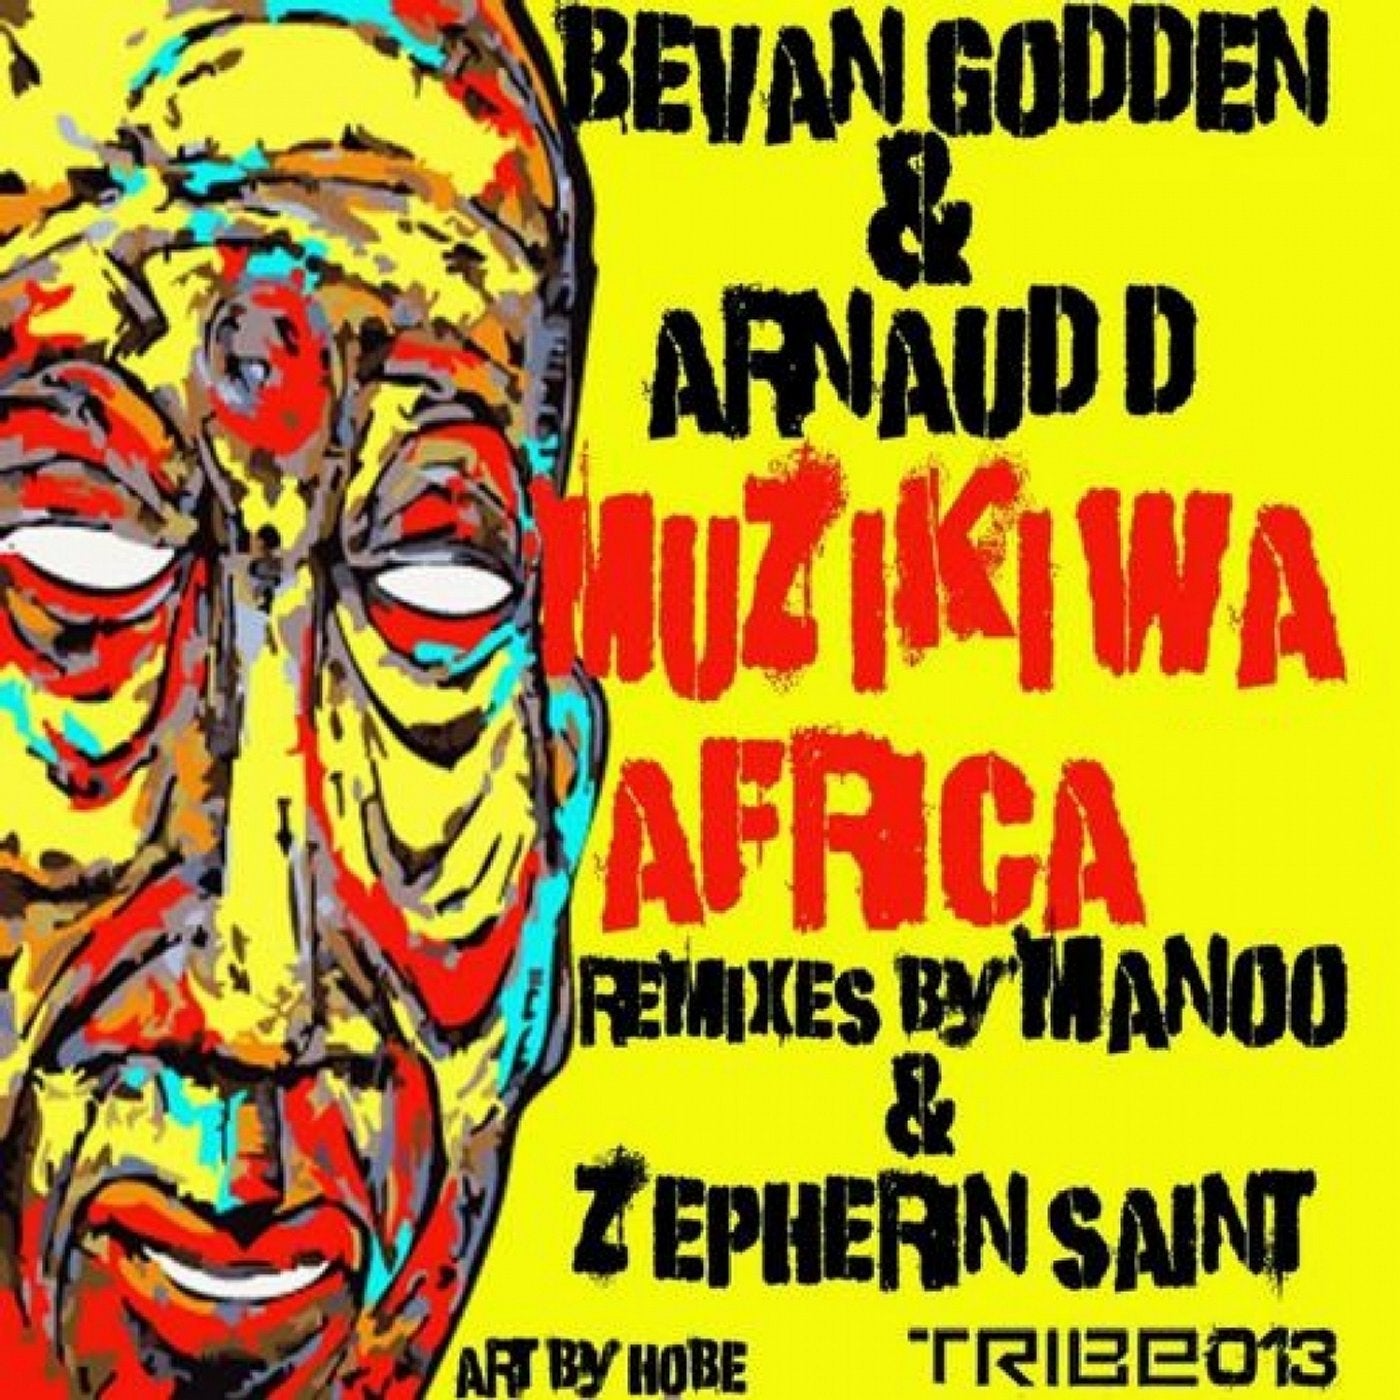 Muziki Wa Africa